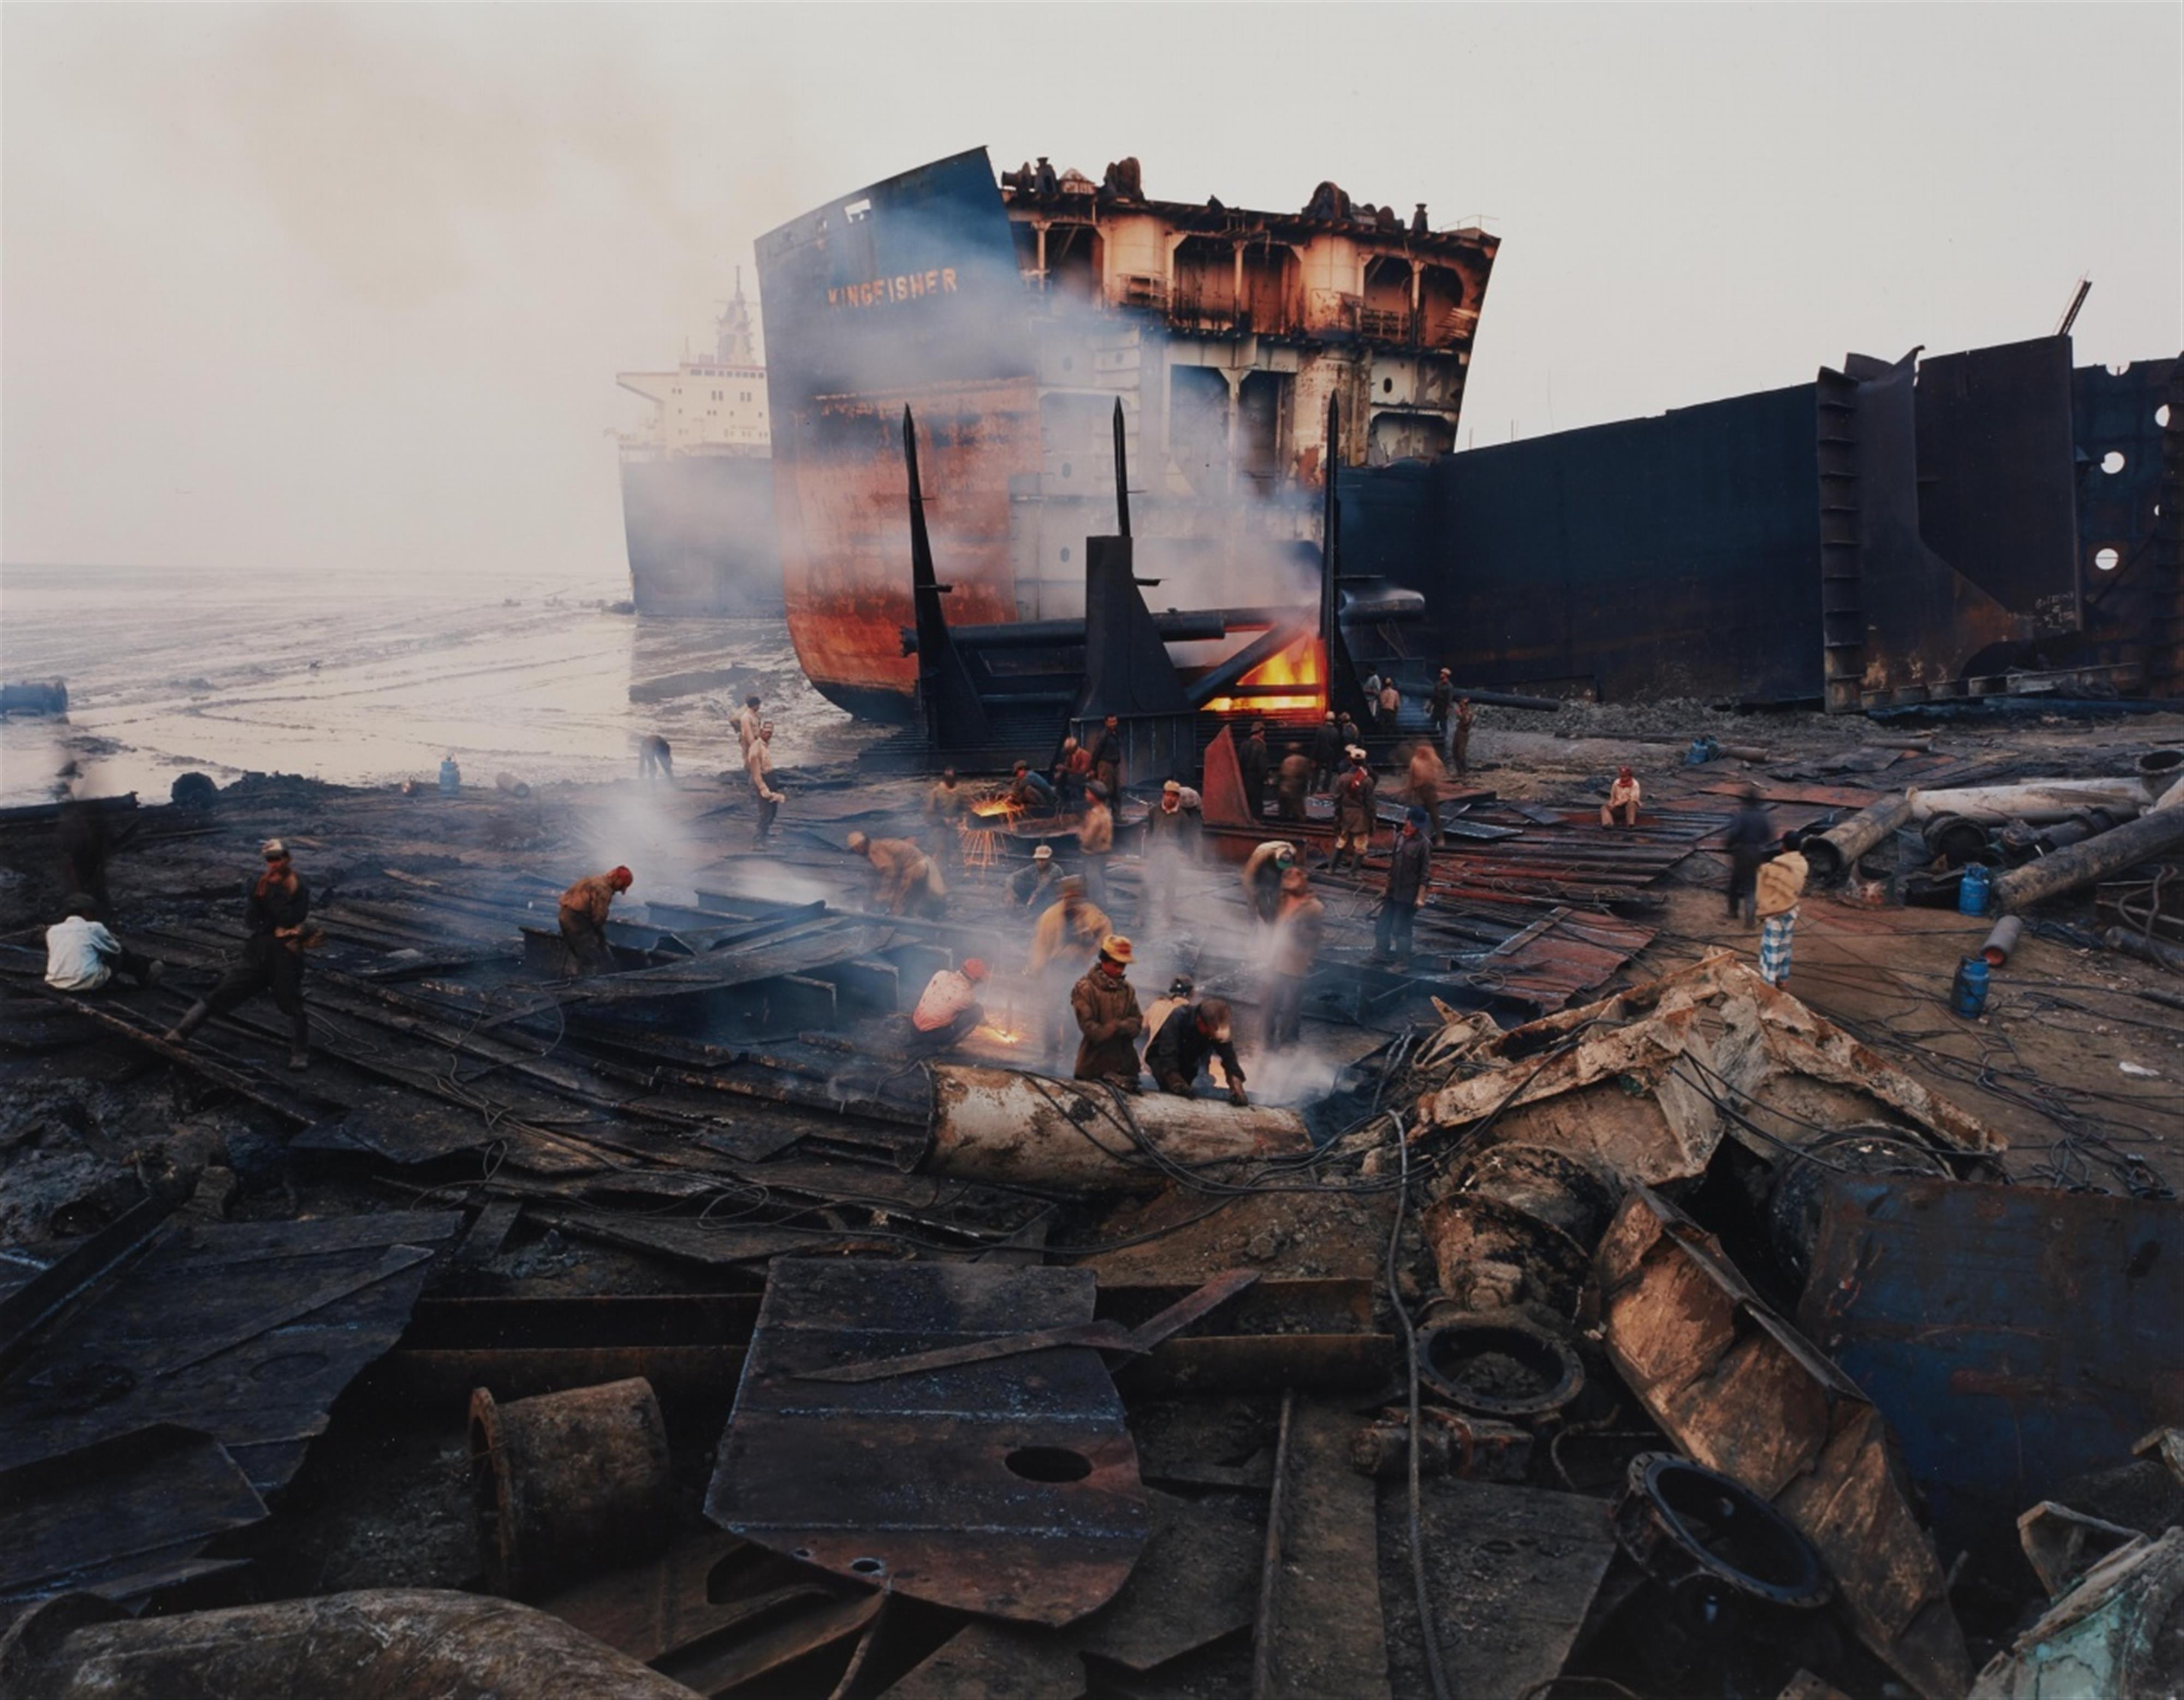 Edward Burtynsky - Shipbreaking #11, Chittagong, Bangladesh - image-1